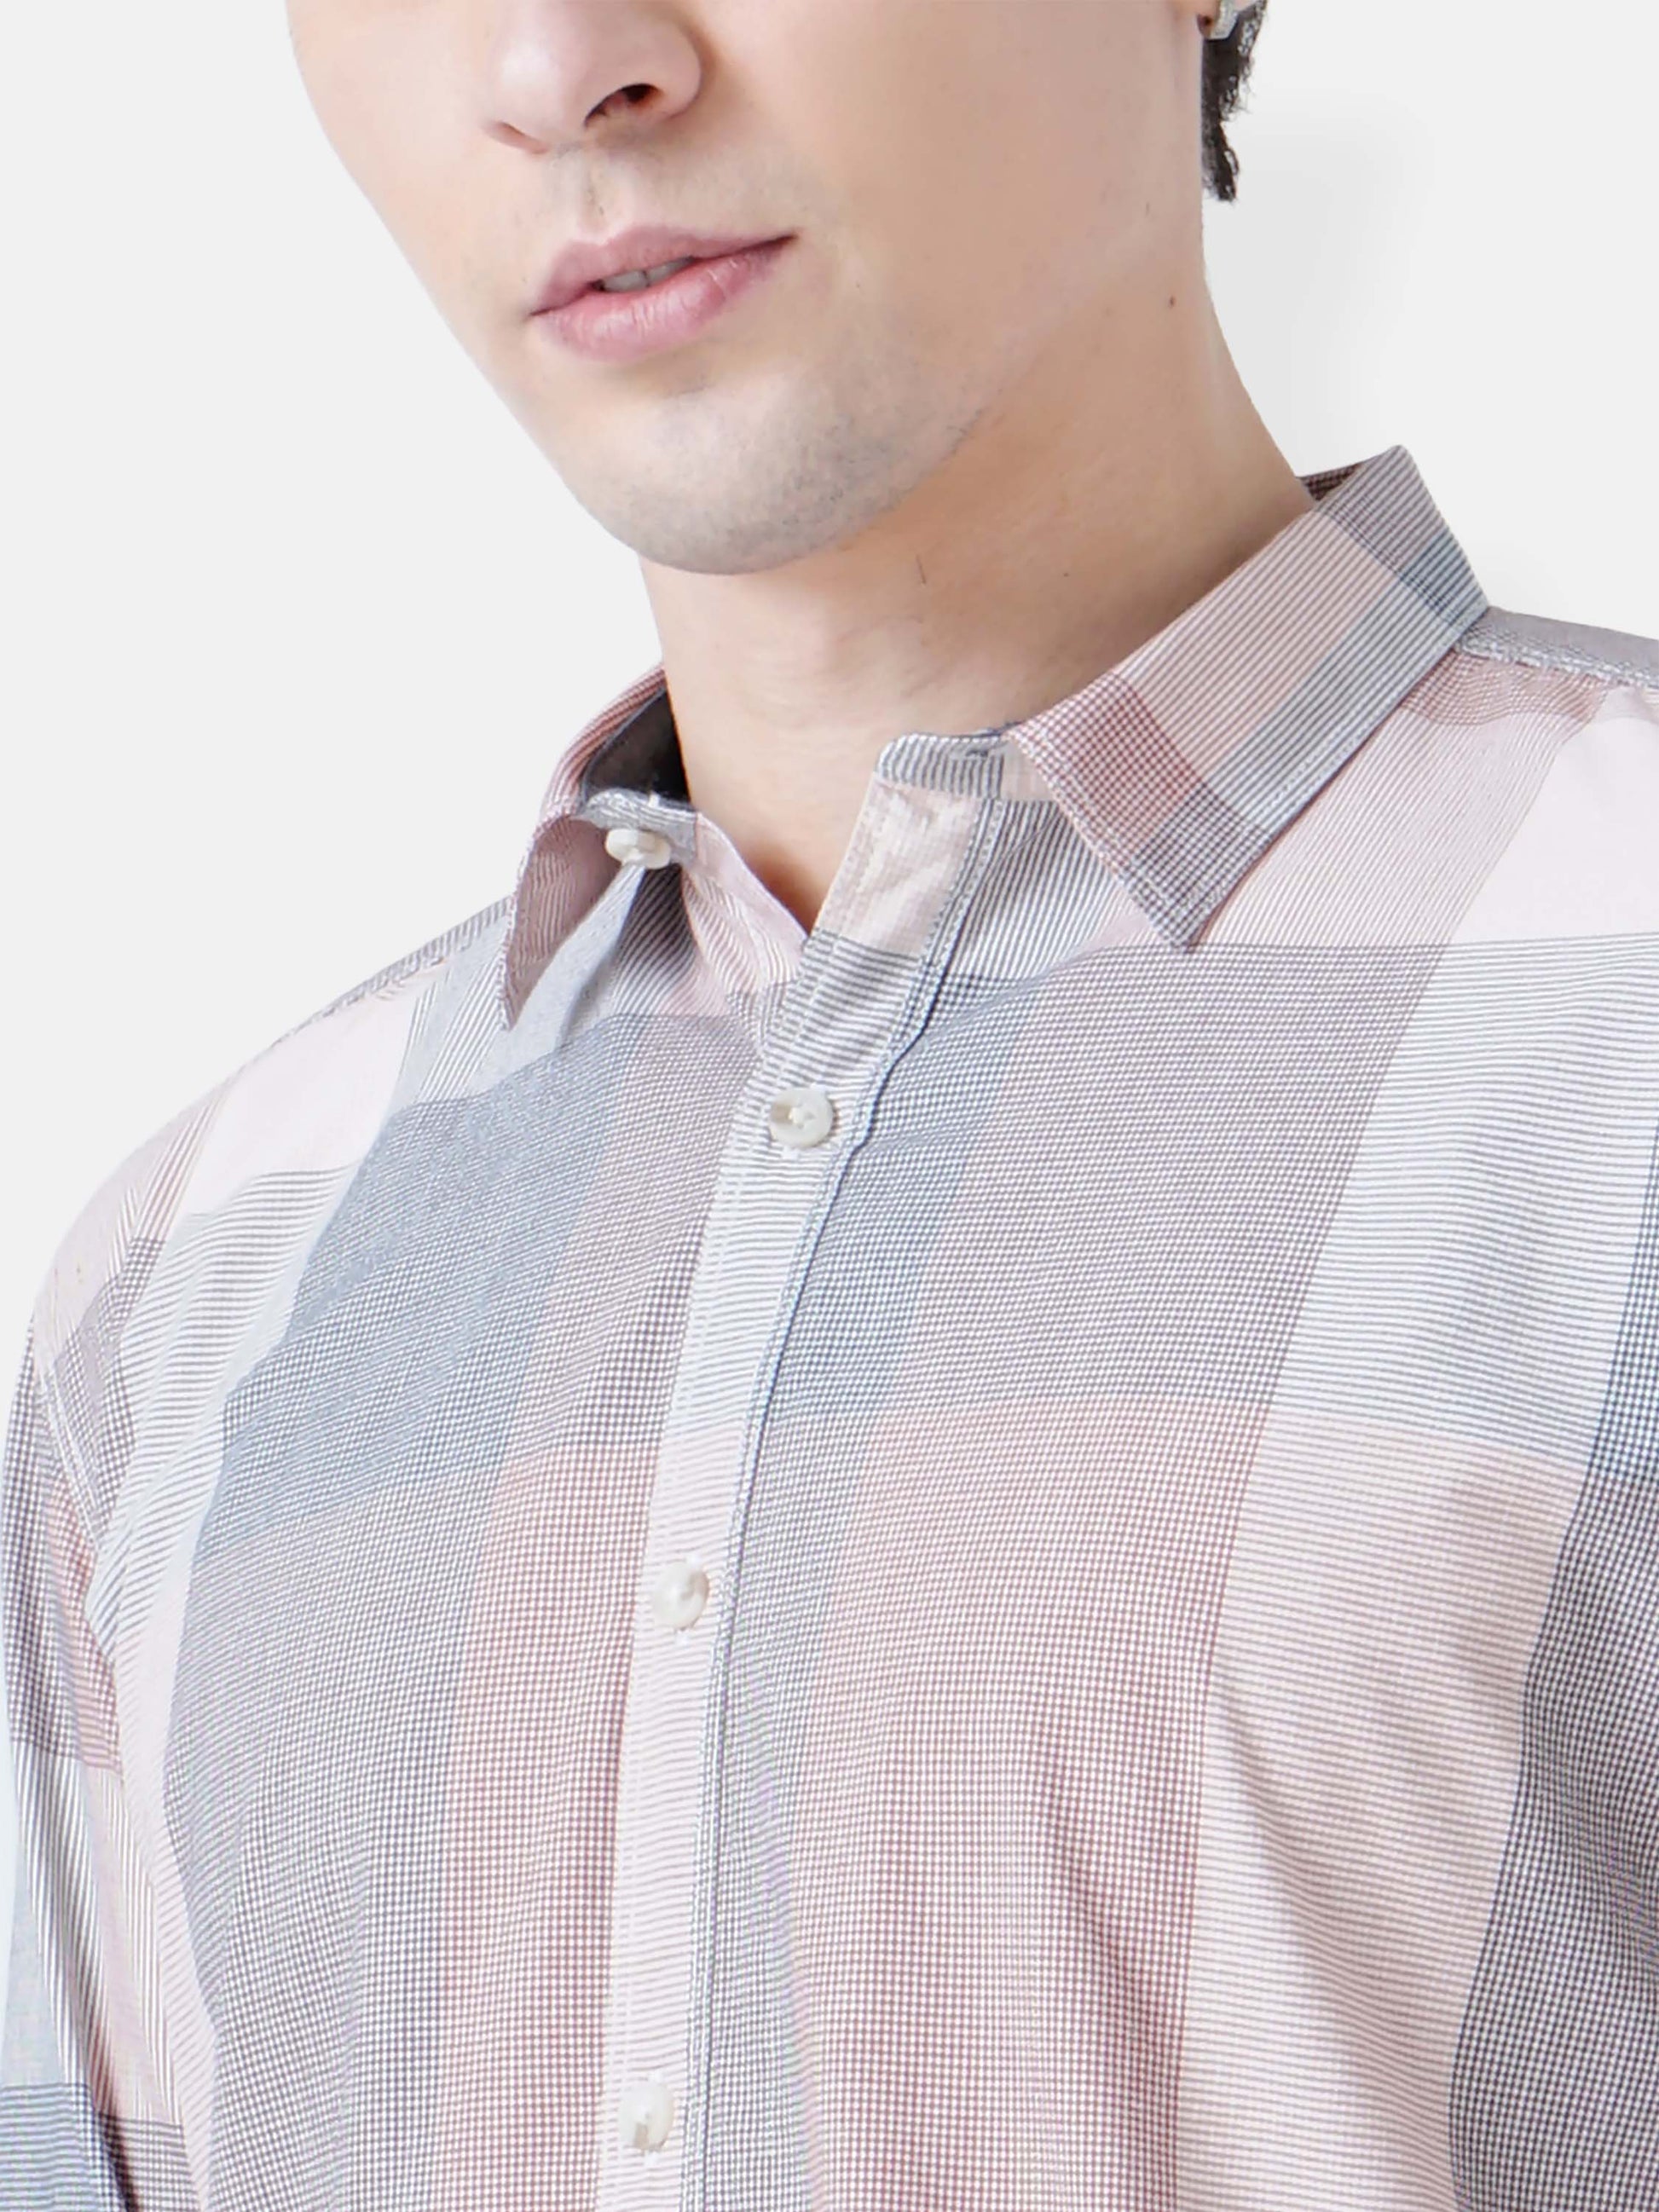 Grey & Pink Checks Shirt